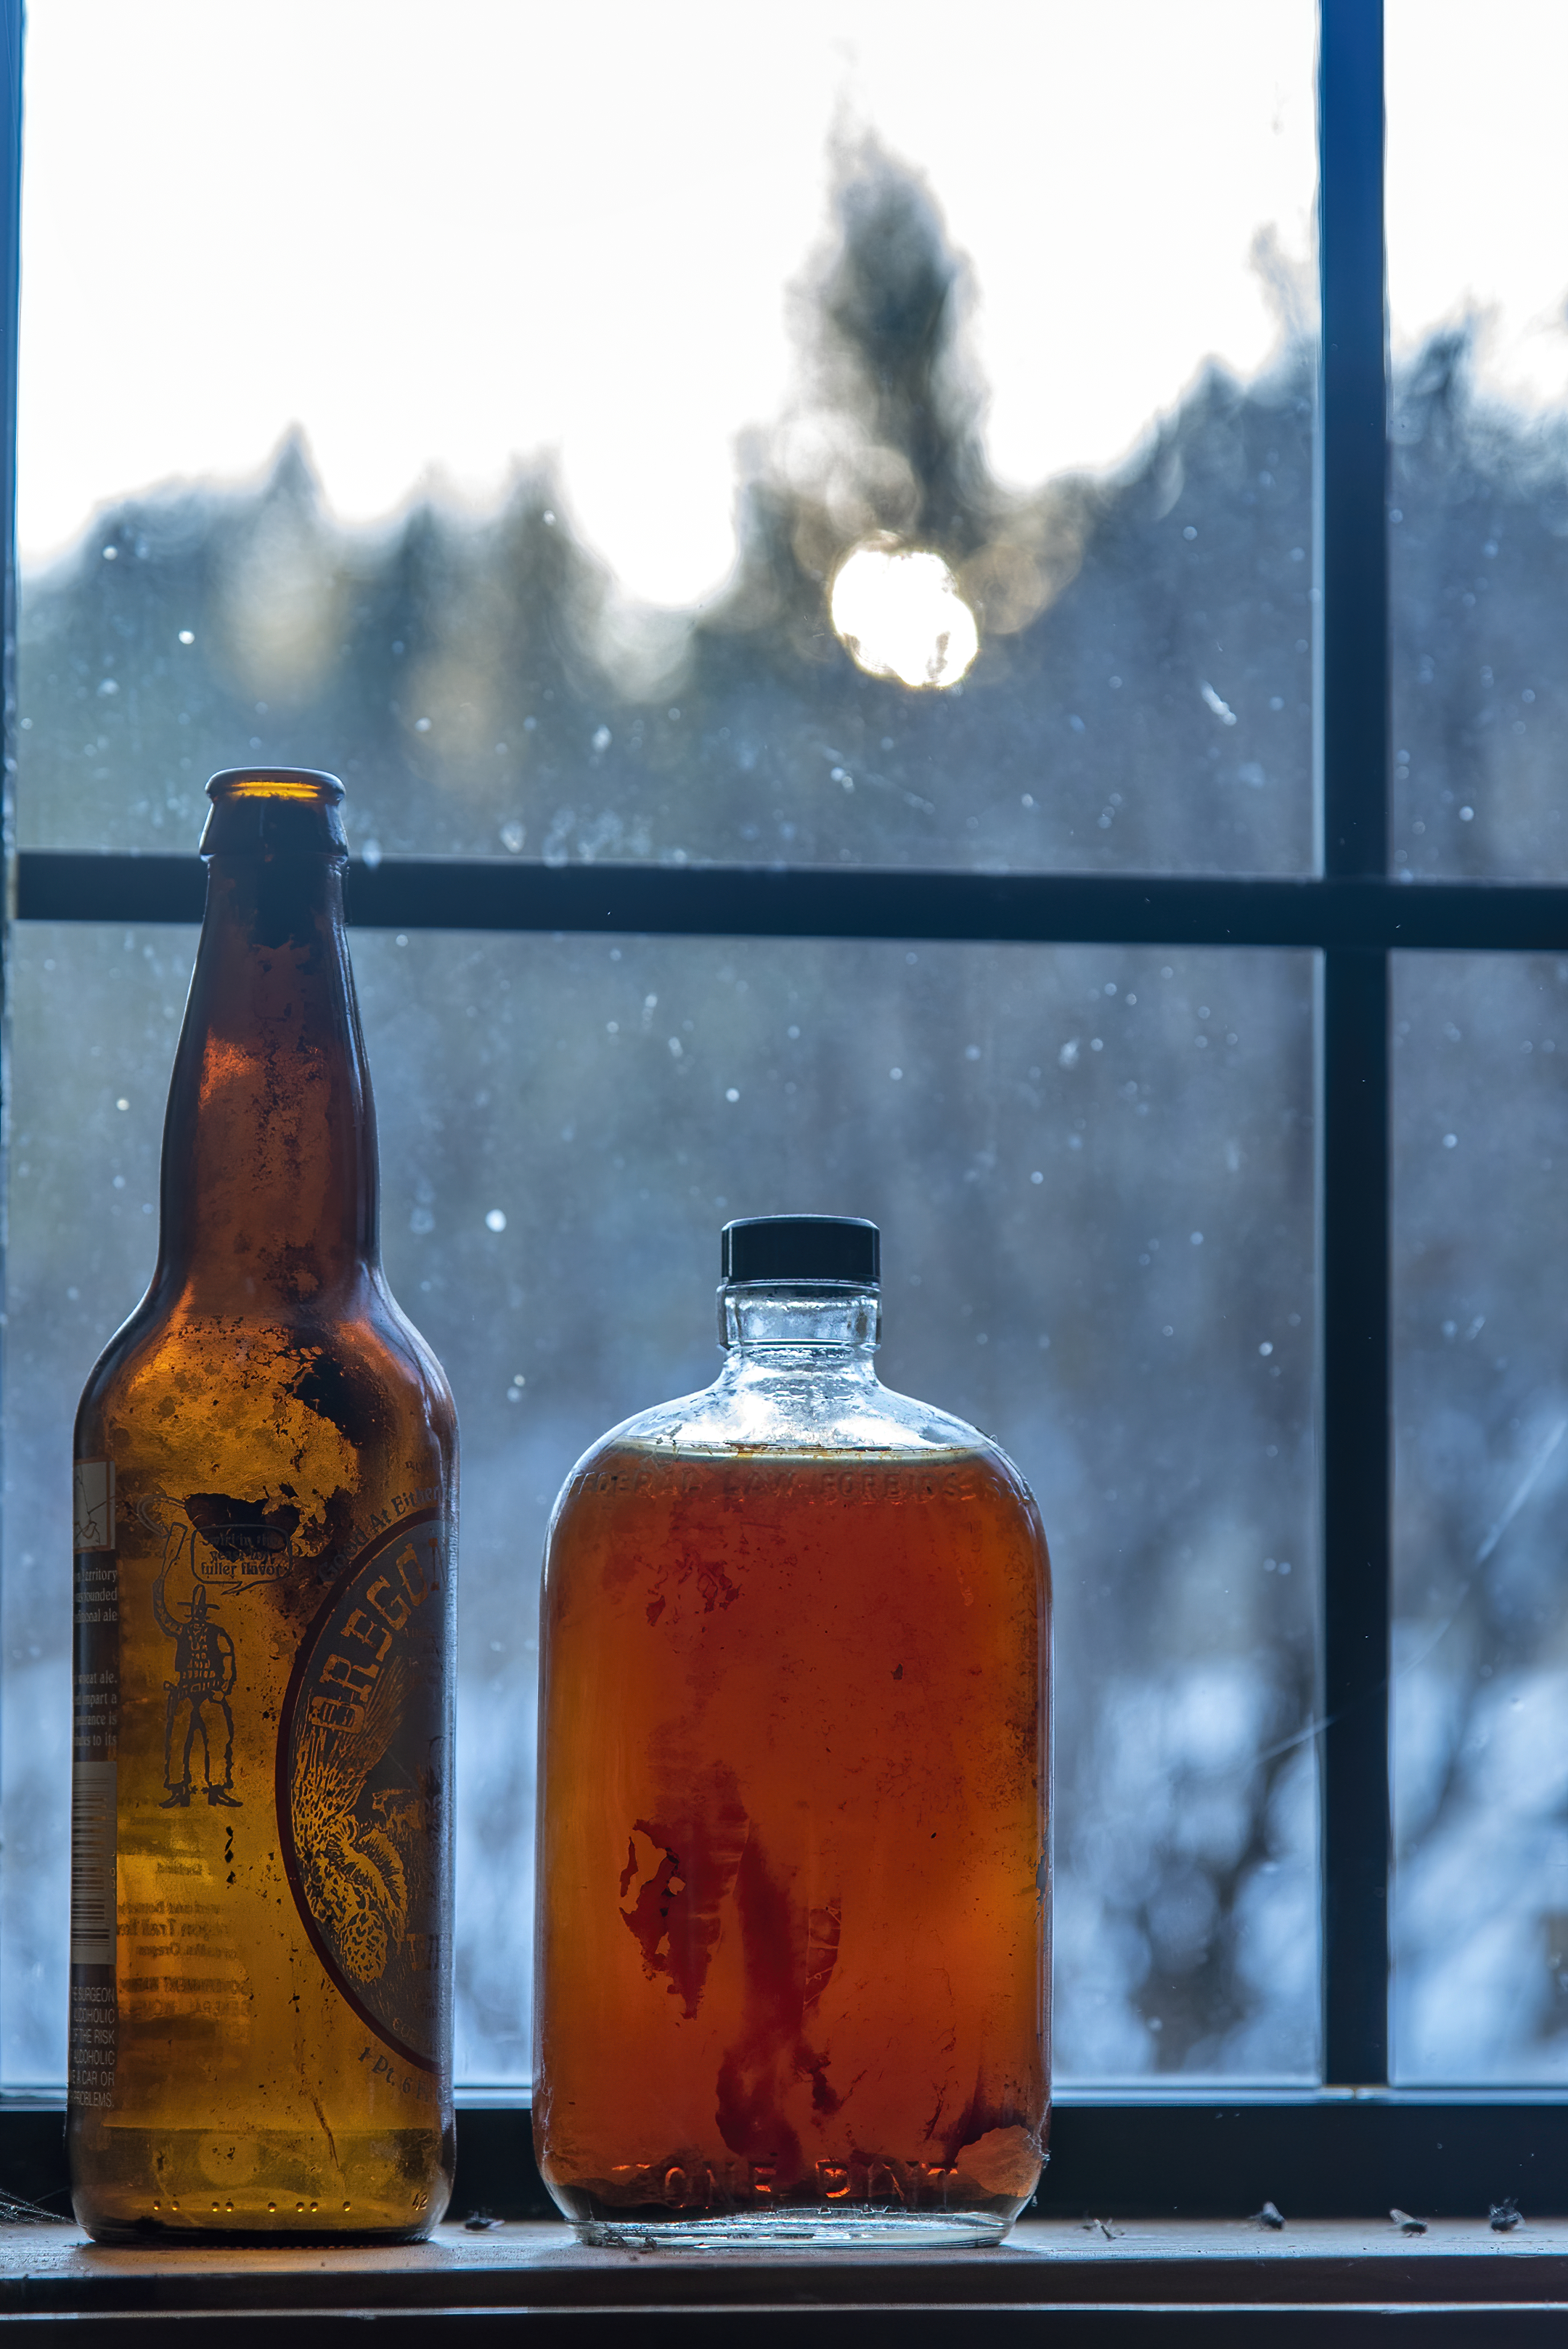  sycan ranch beatty bottles winter topaz denoise ai-denoise